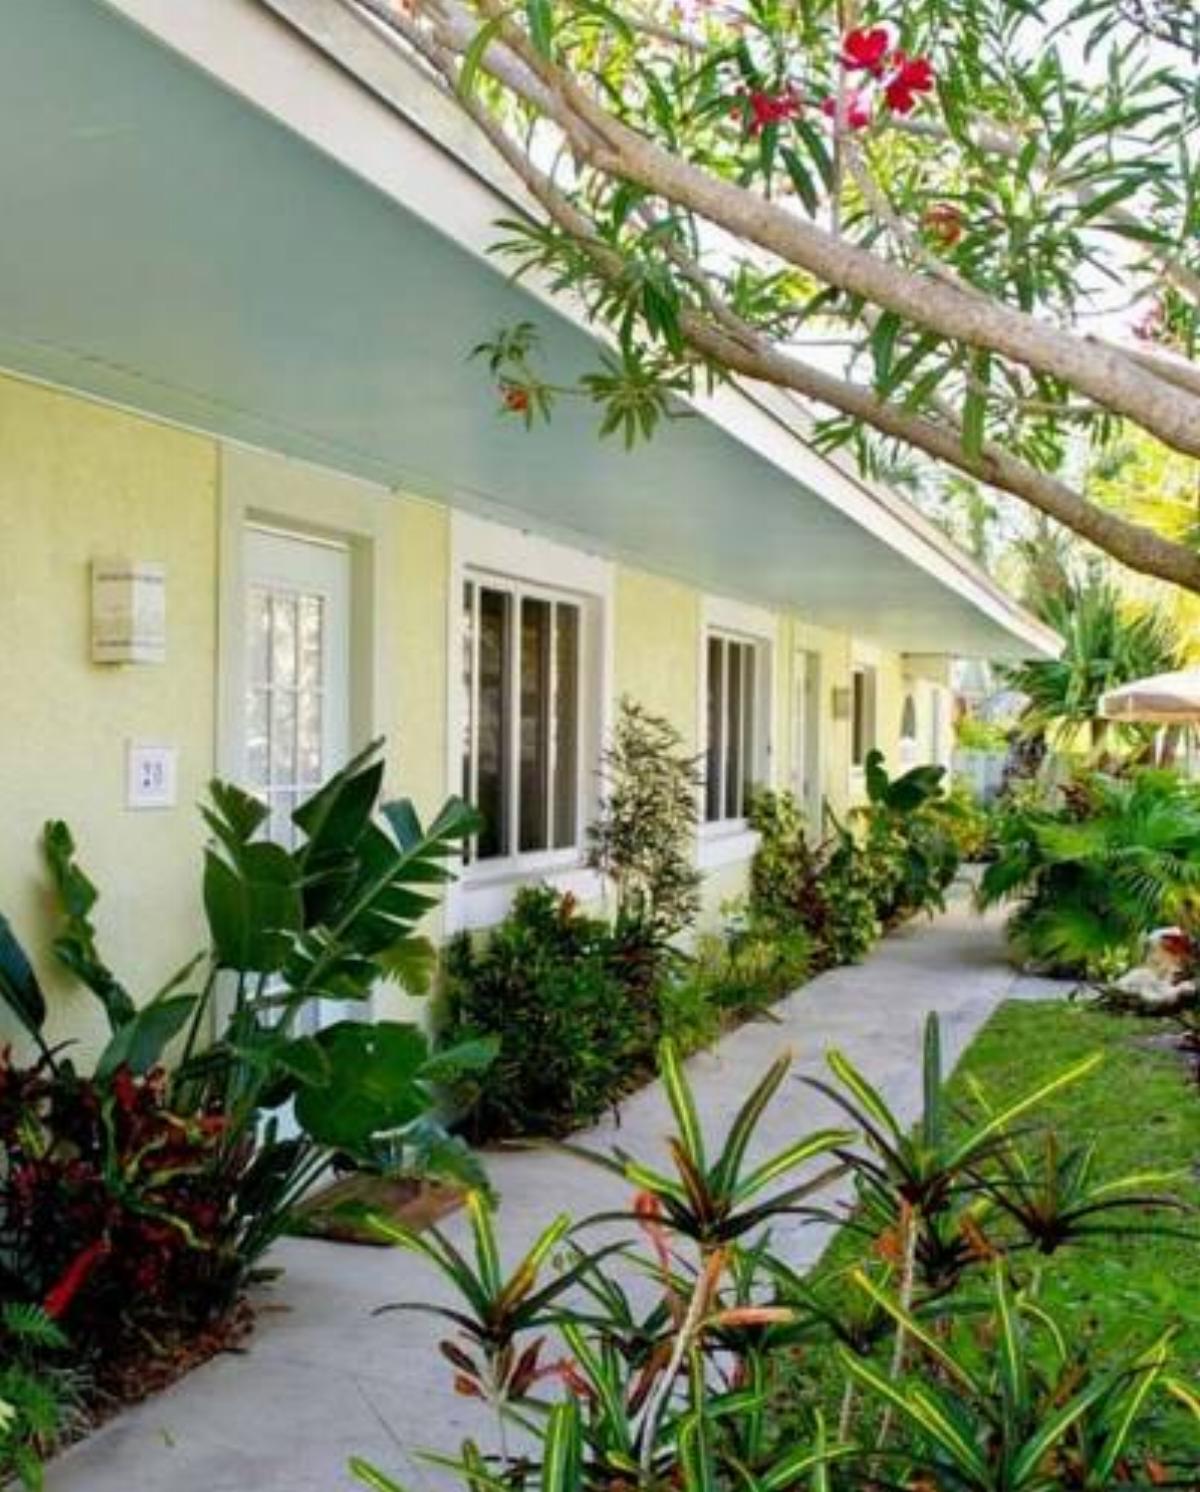 An Island Getaway at Palm Tree Villas